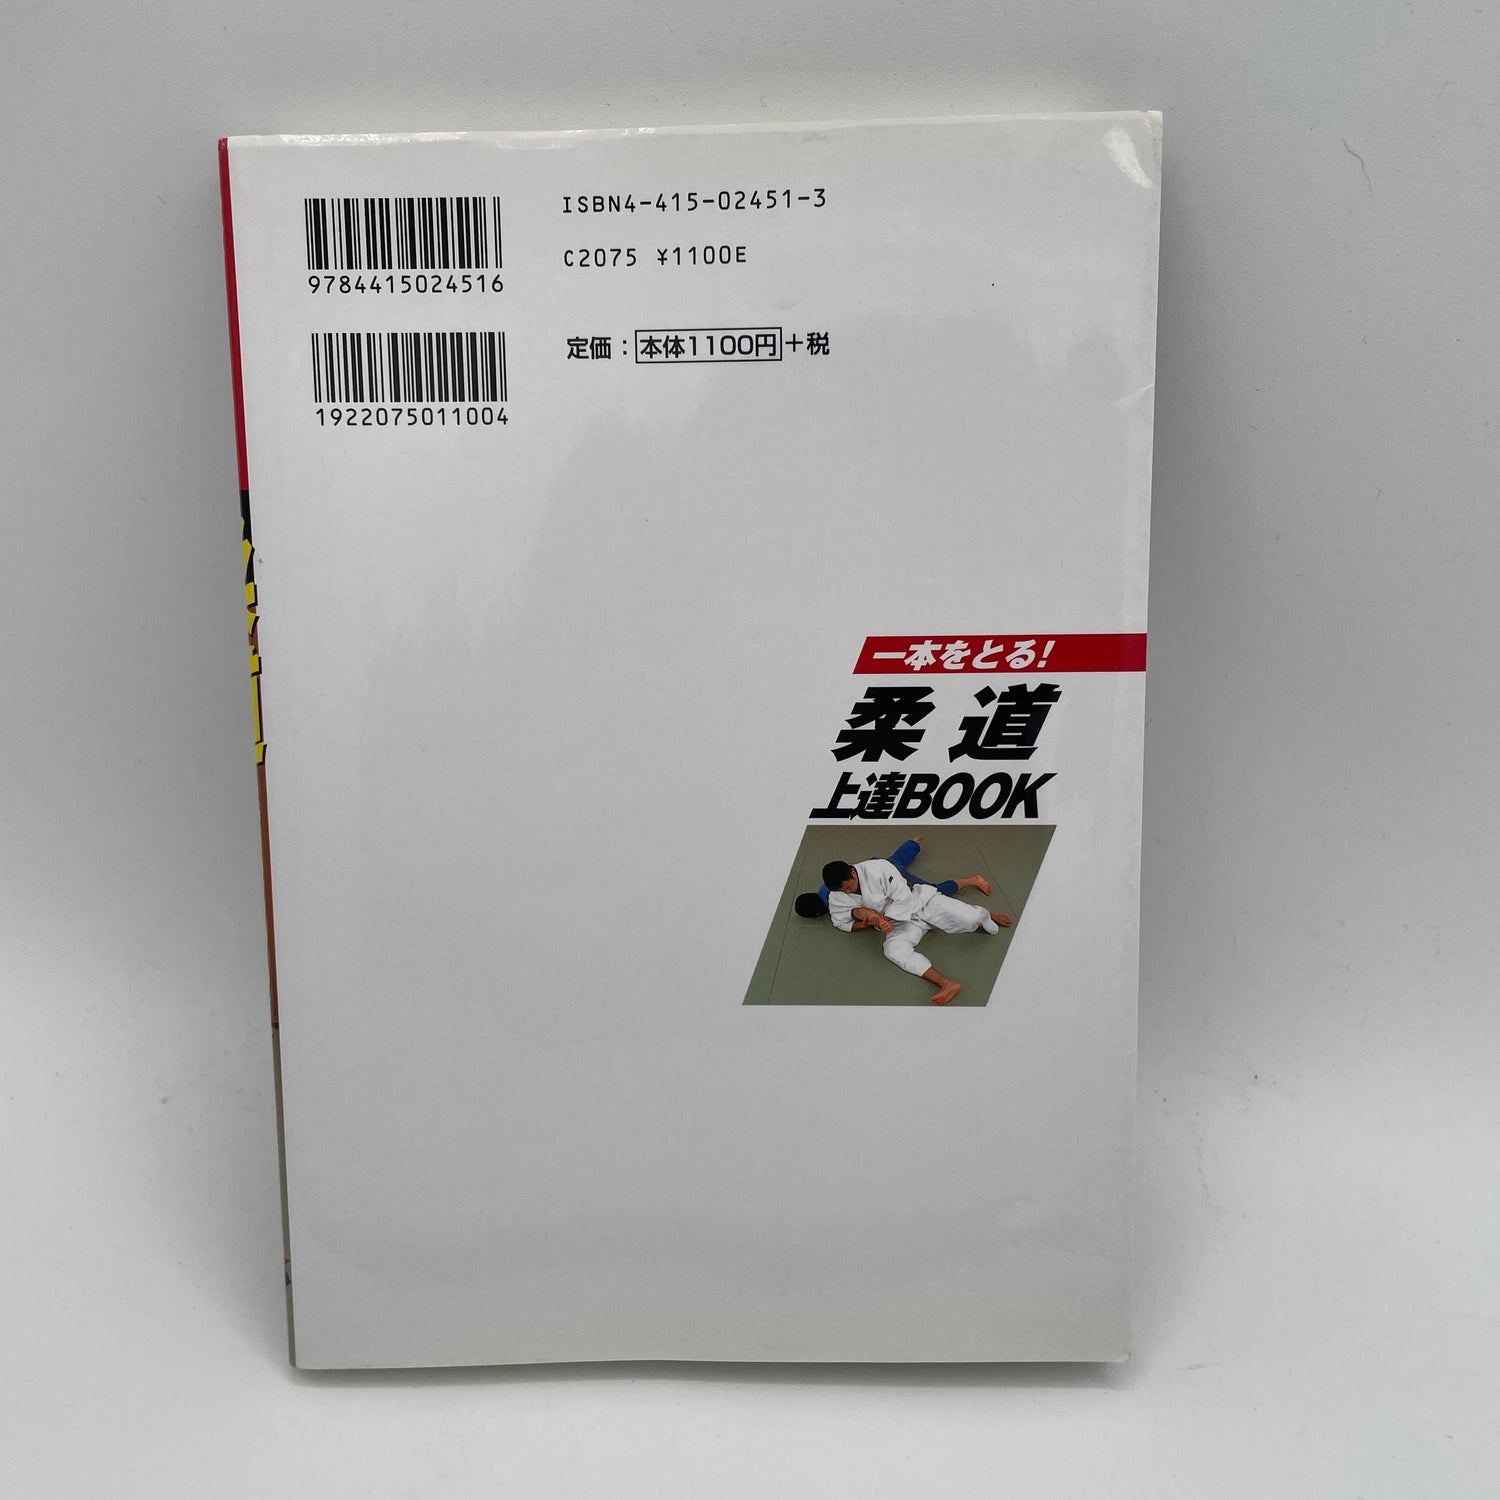 Get the Ippon! Judo Improvement Book by Koji Komata (Preowned)